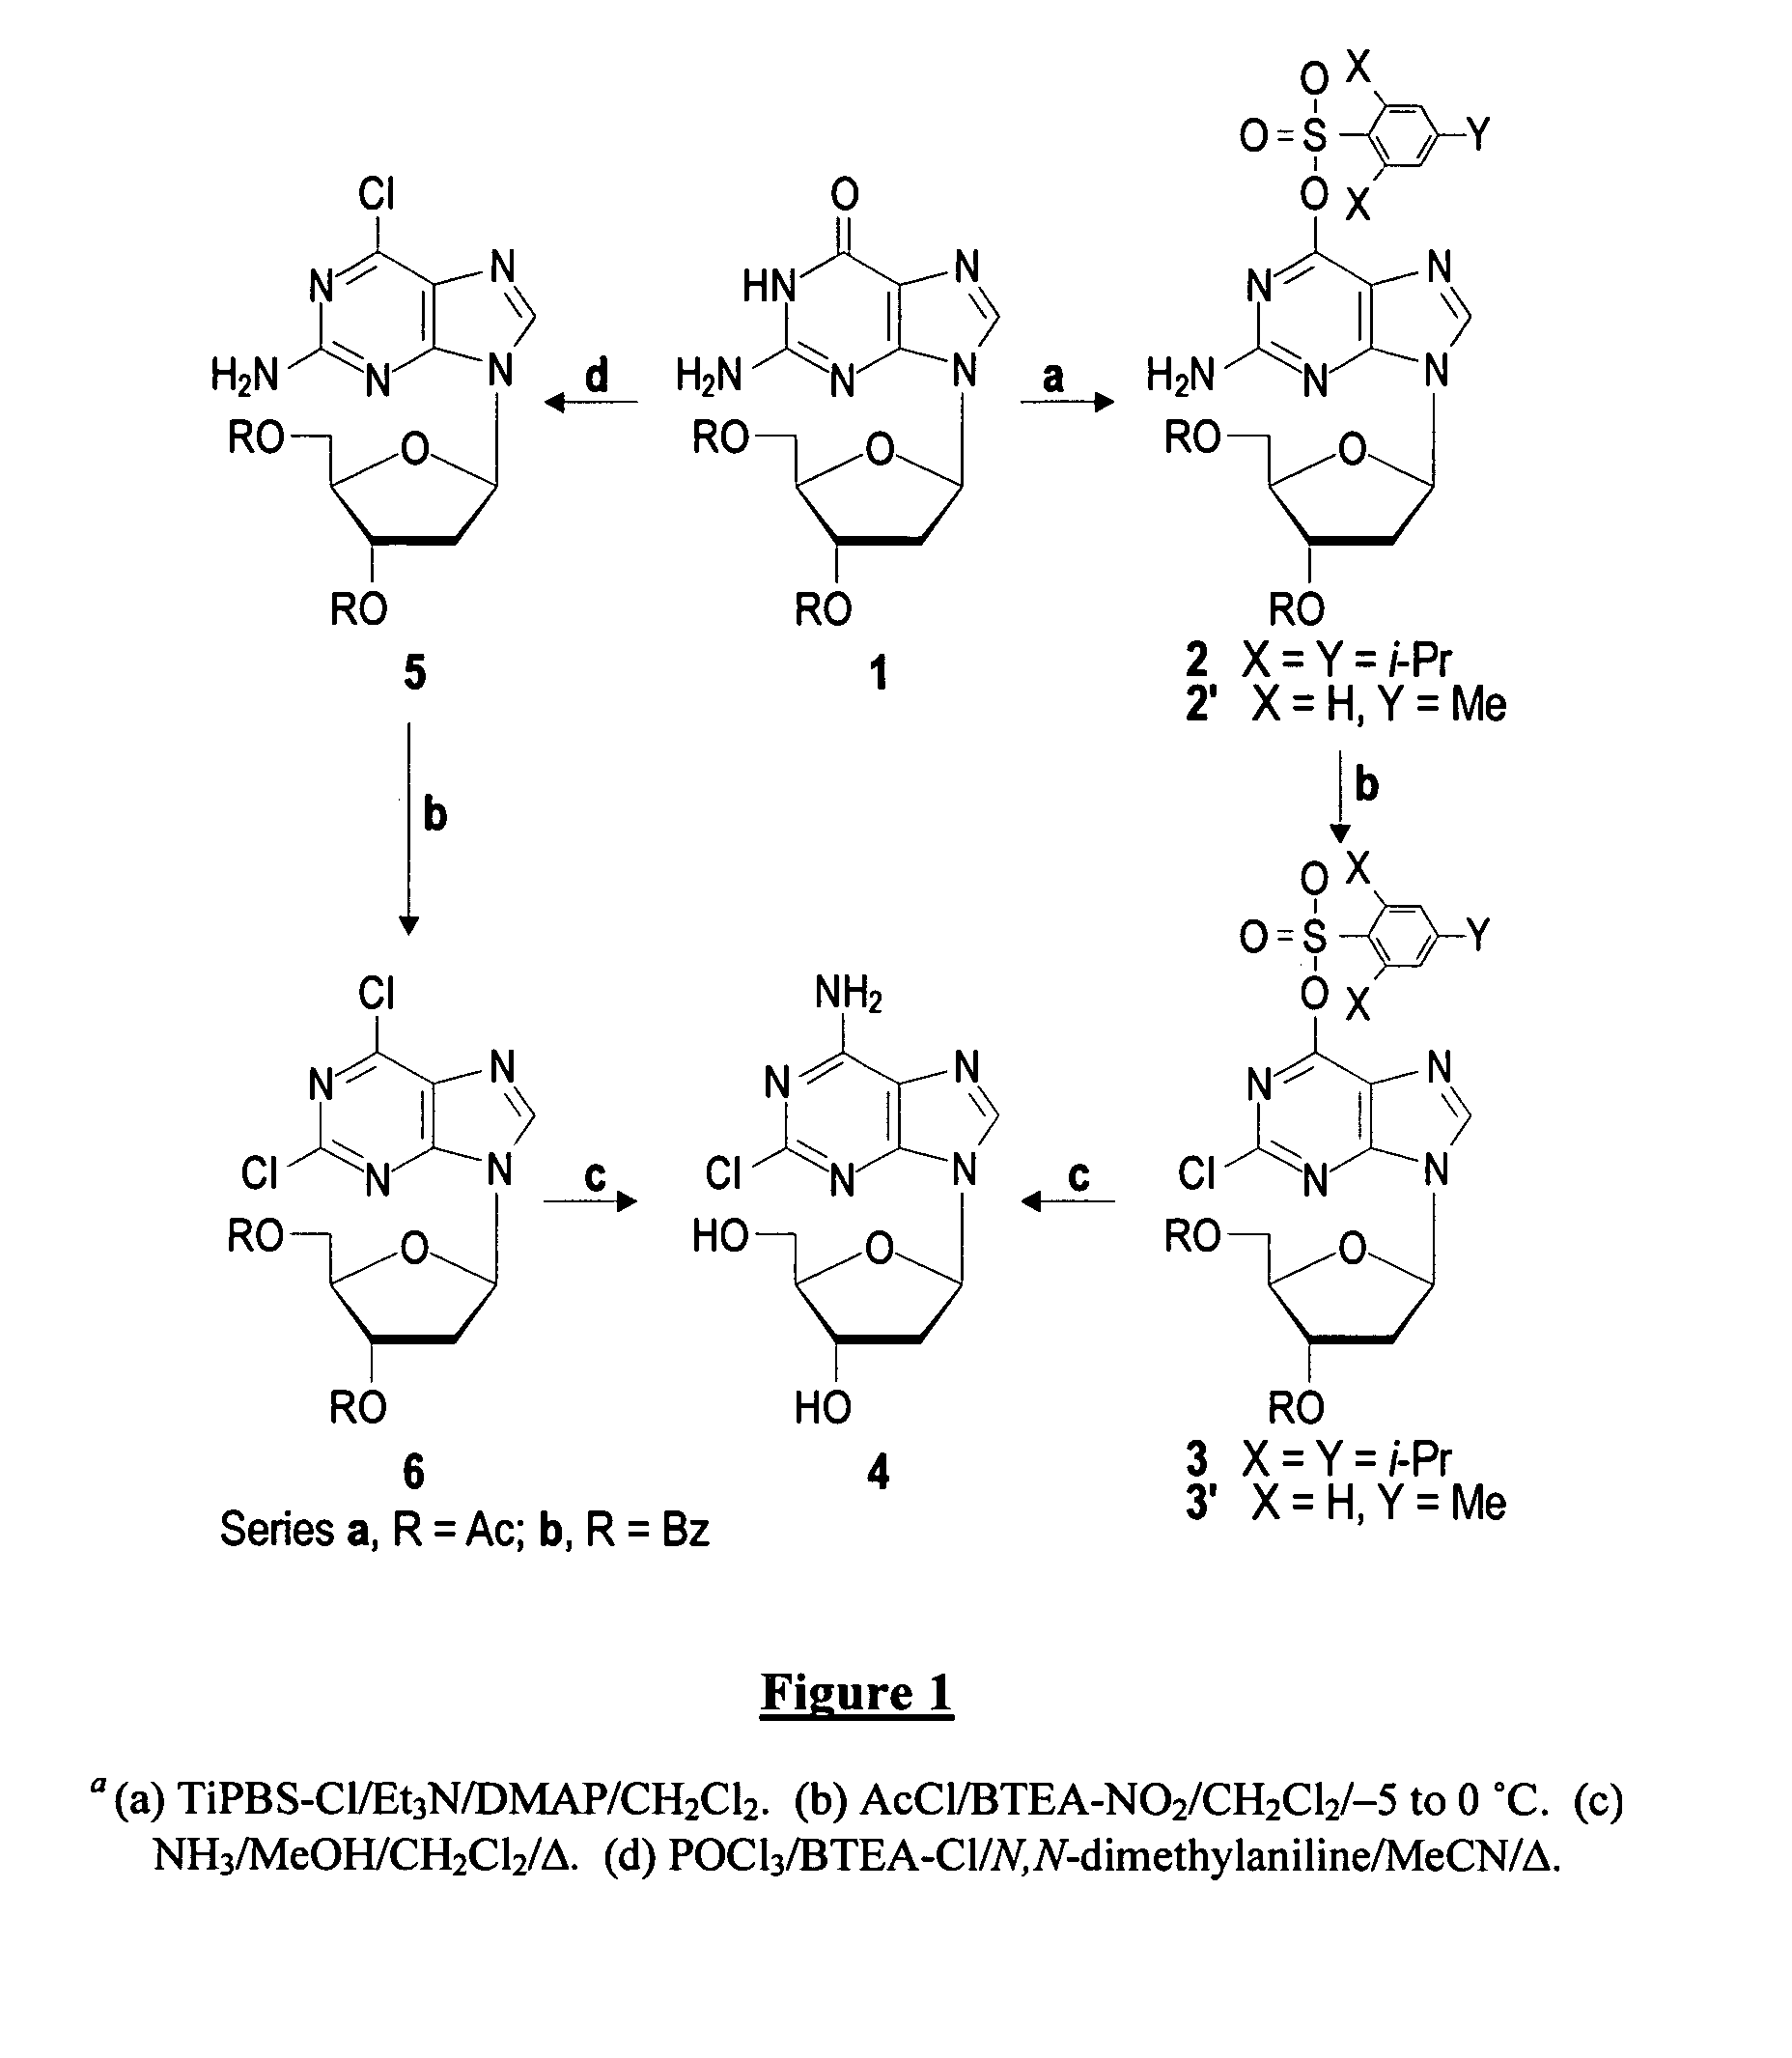 Method for the preparation of 2-halo-2'-deoxyadenosine compounds from 2'-deoxyguanosine